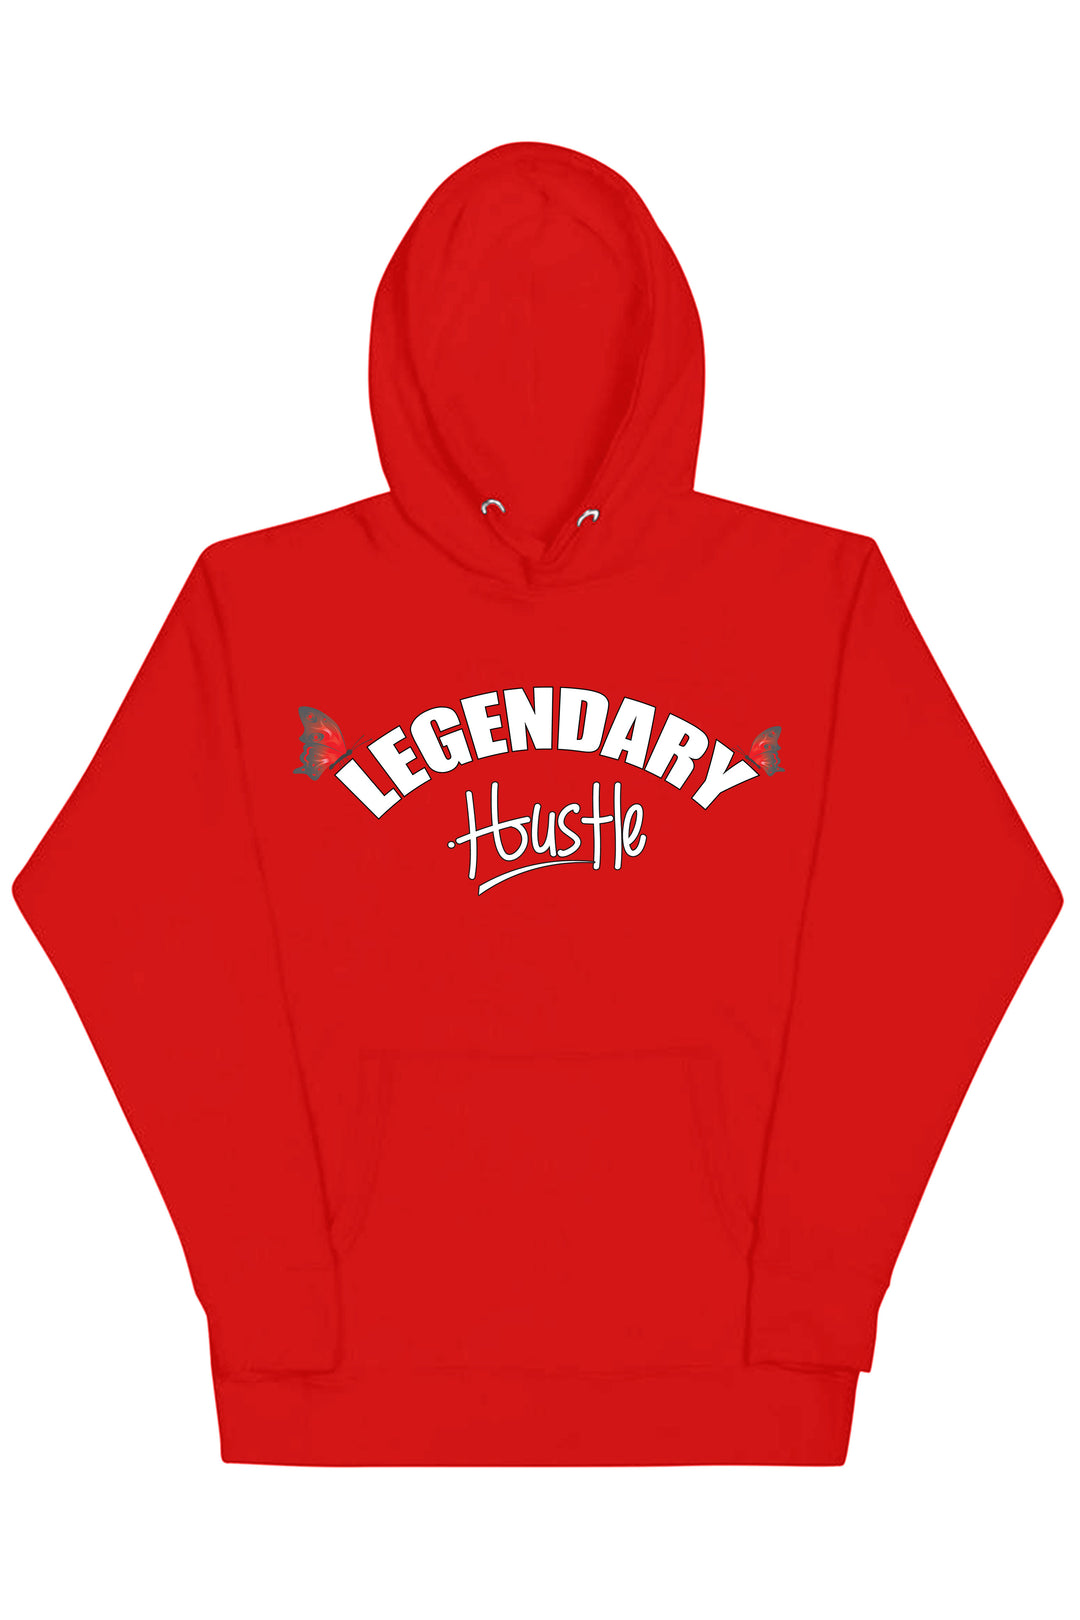 Legendary Hustle Hoodie (White Logo) - Zamage